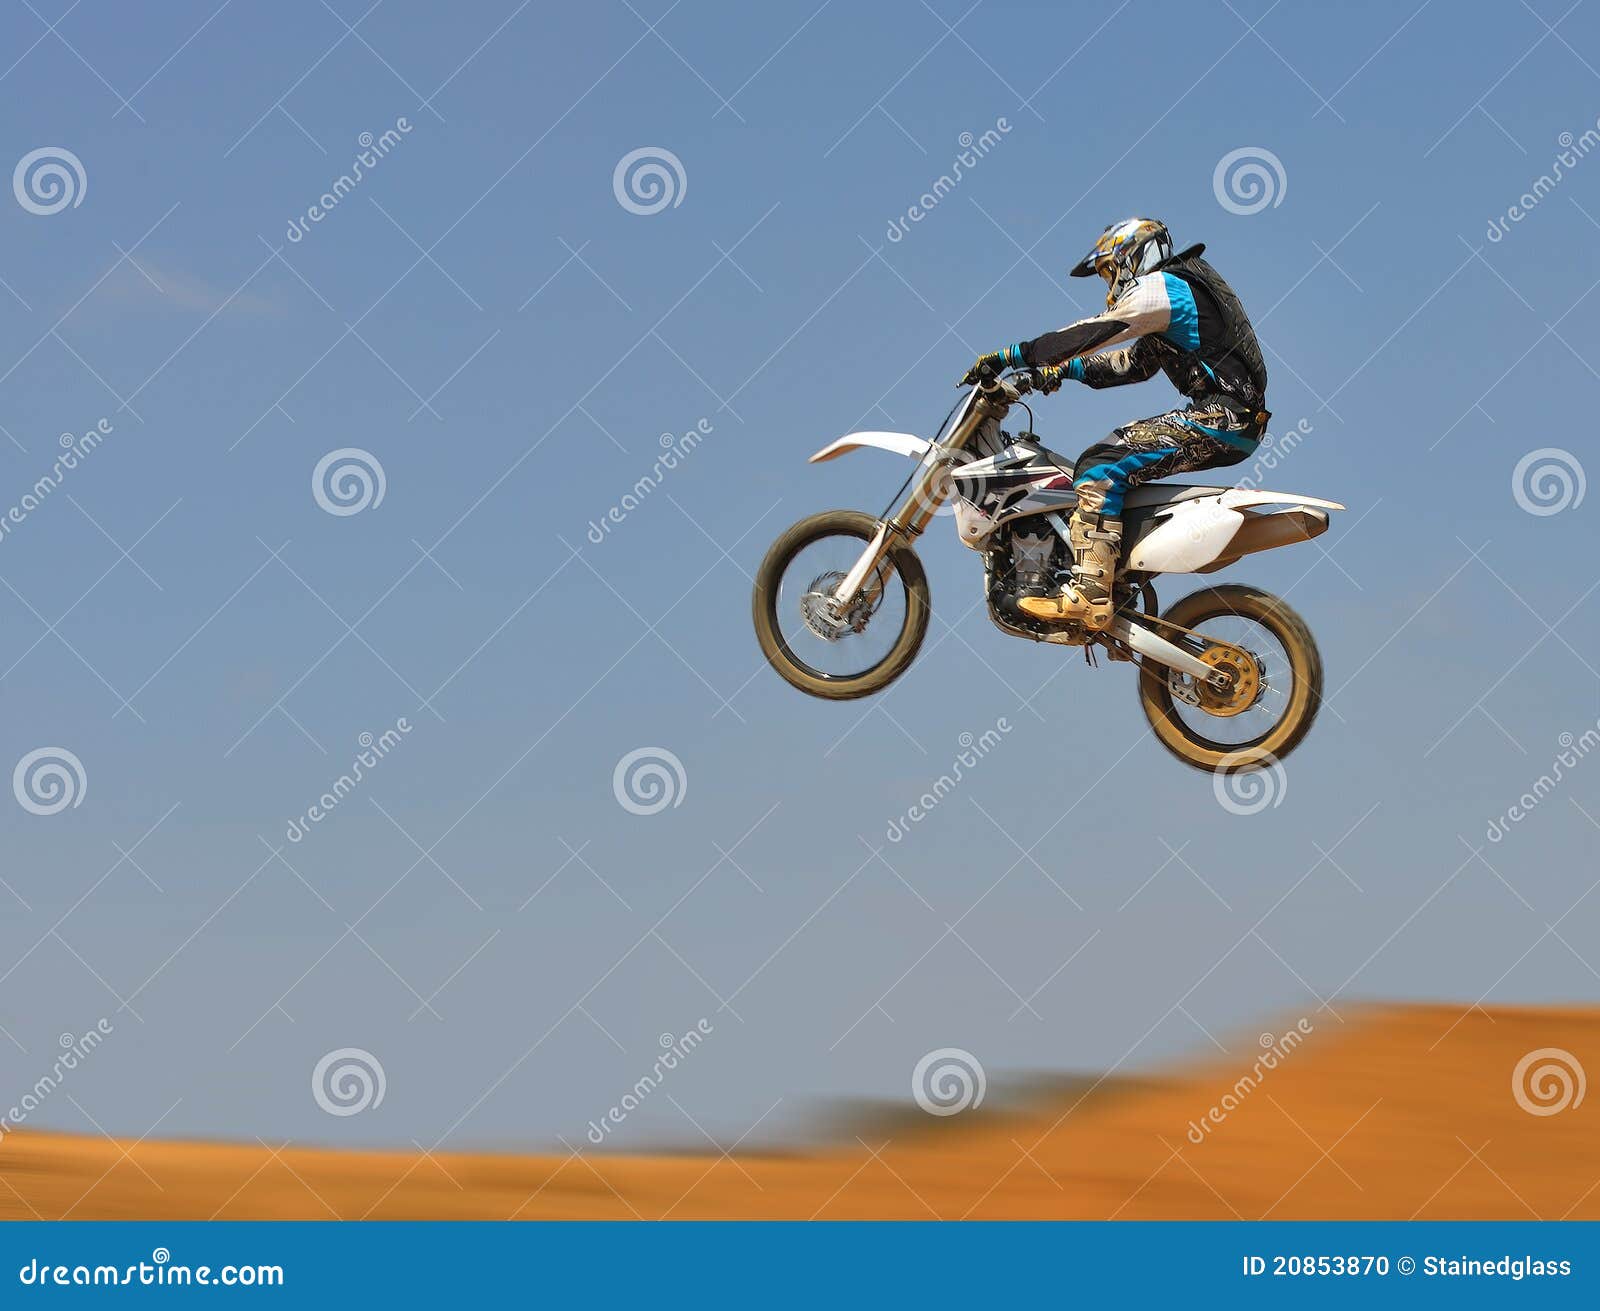 dirt bike jumping - panning